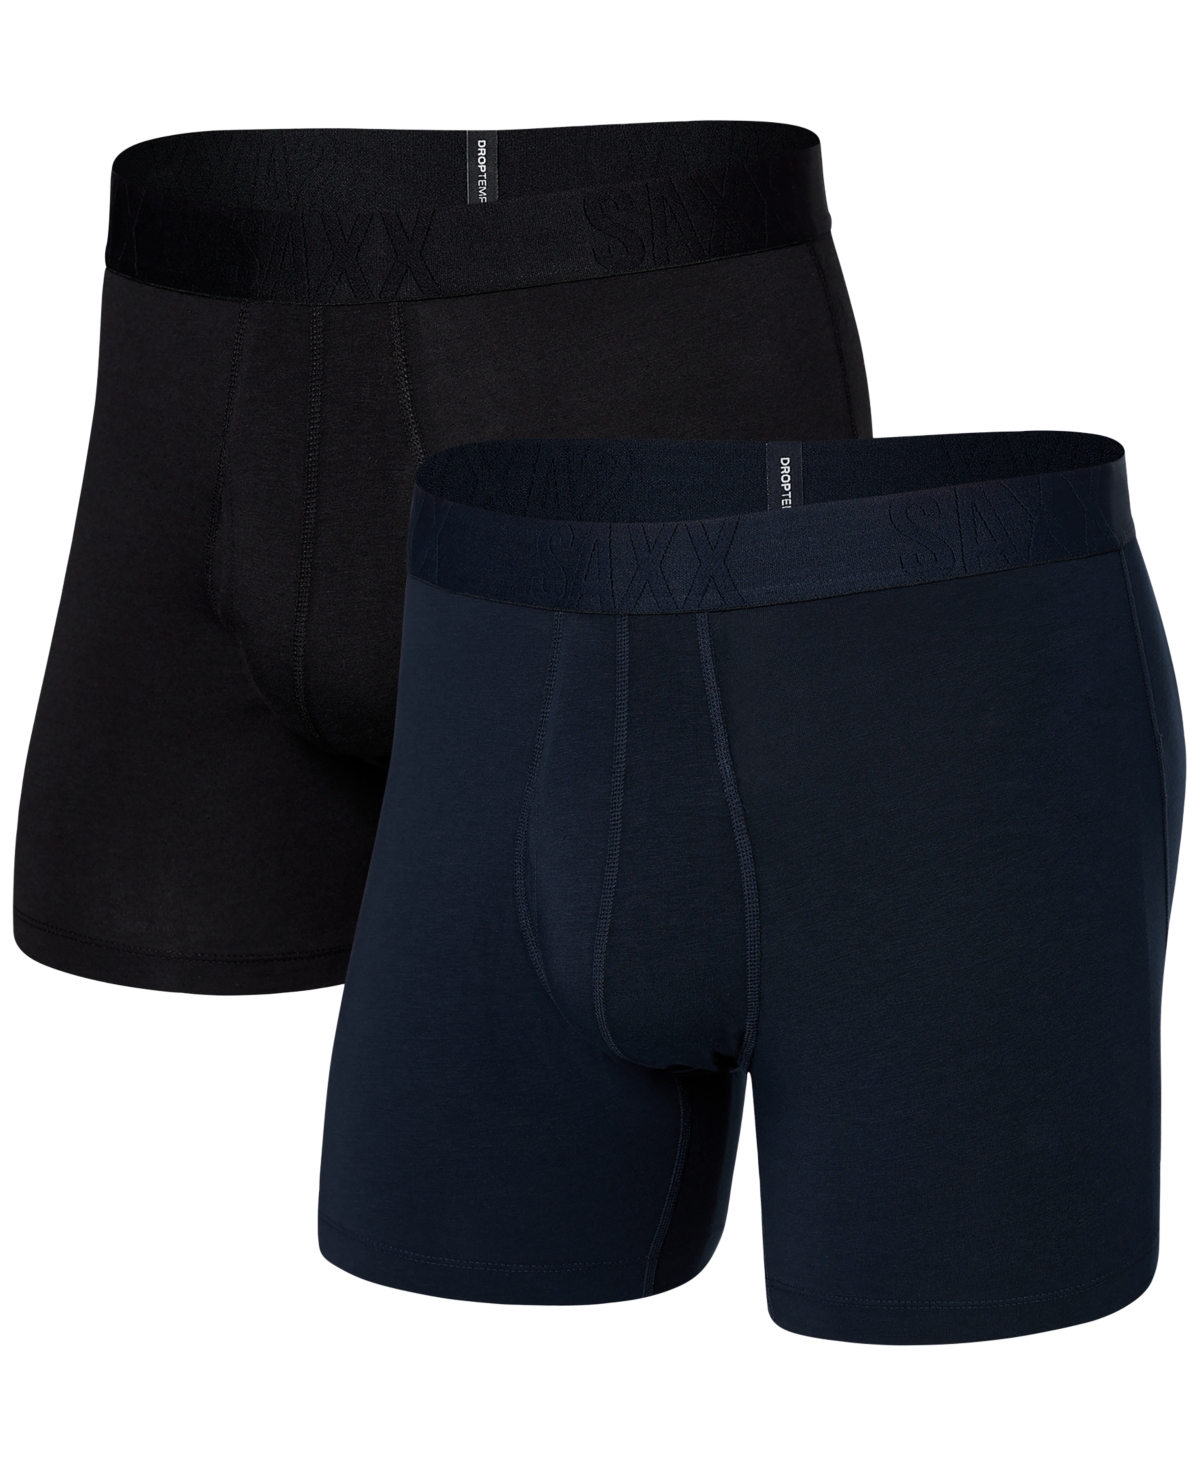 Saxx Men's Droptemp Cooling Cotton Slim Fit Boxer Briefs – 2pk In Dark Ink,black